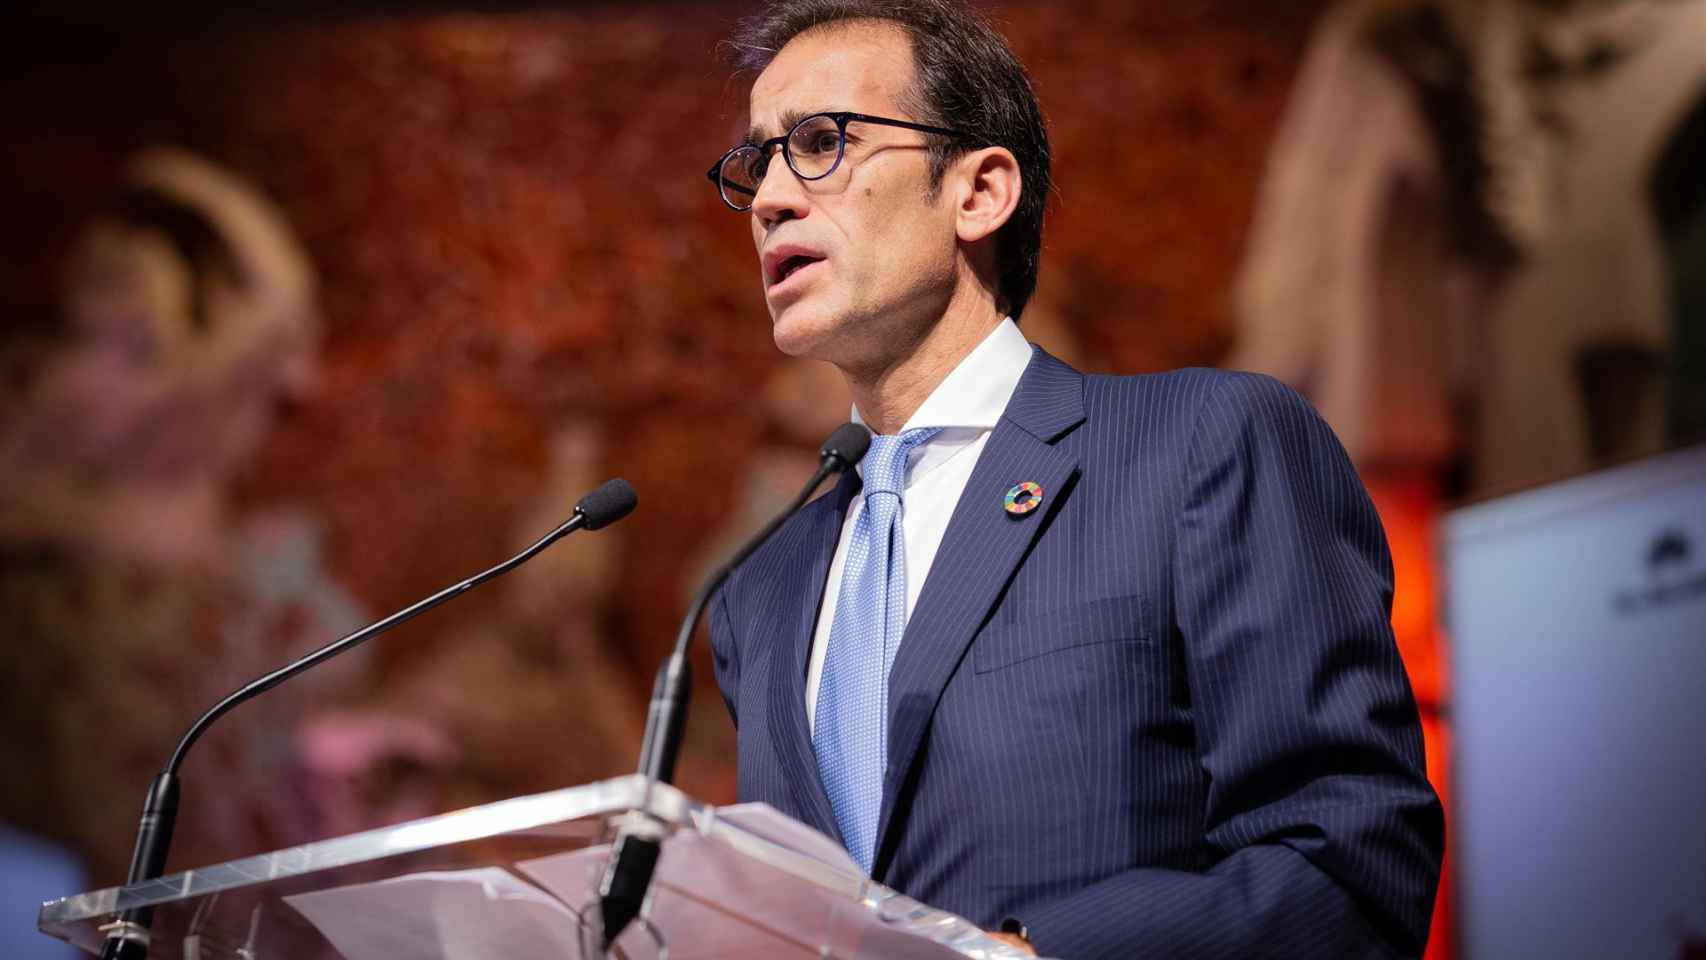 El presidente del Consejo de Fira Barcelona, Pau Relat / Europa Press - David Zorrakino